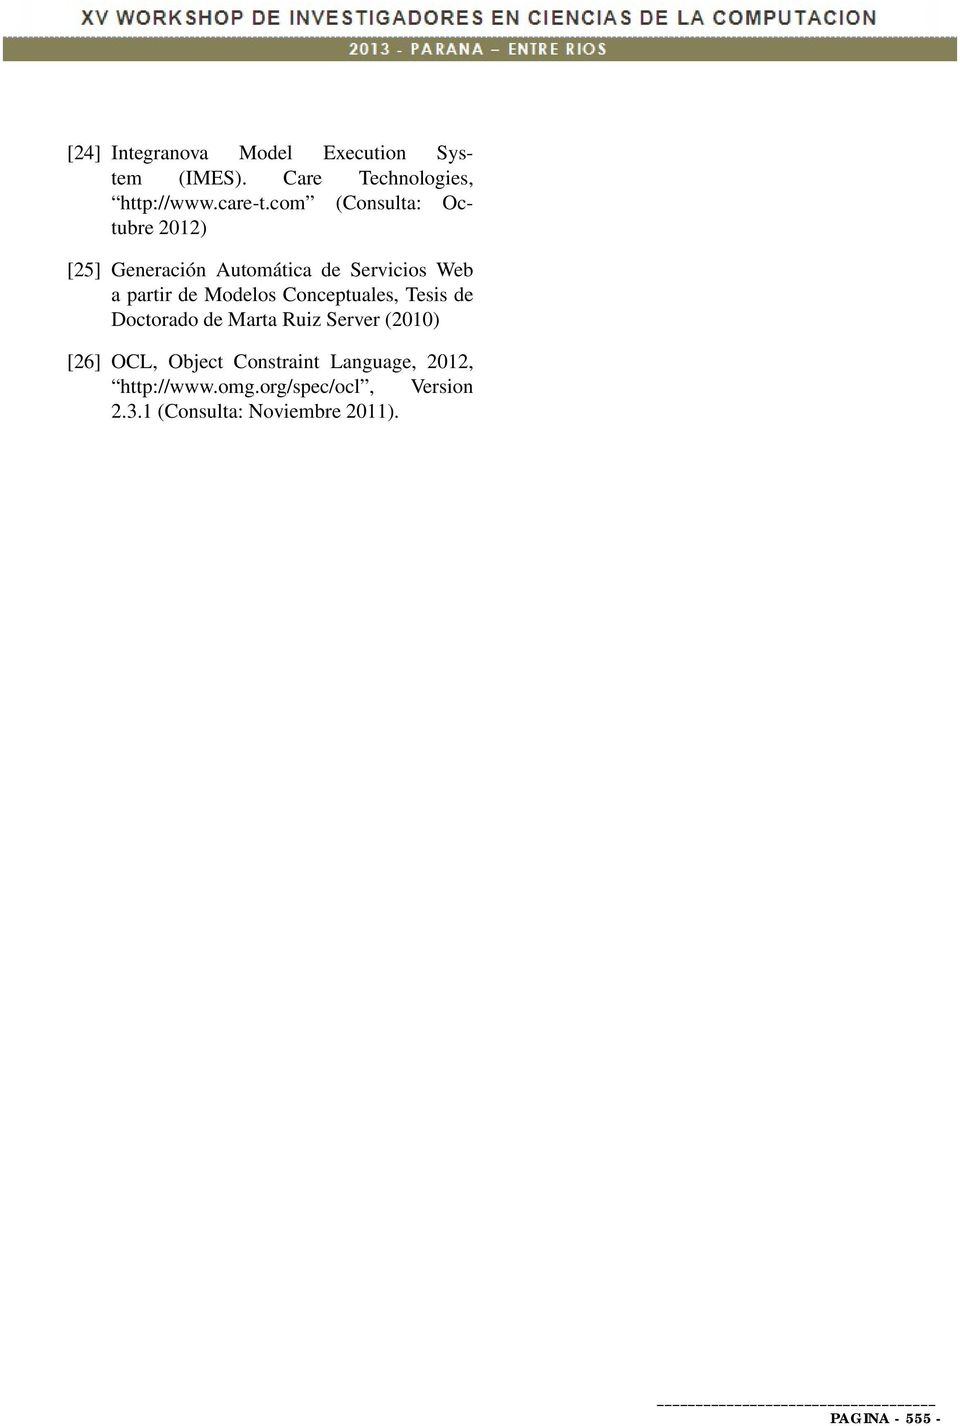 Modelos Conceptuales, Tesis de Doctorado de Marta Ruiz Server (2010) [26] OCL, Object